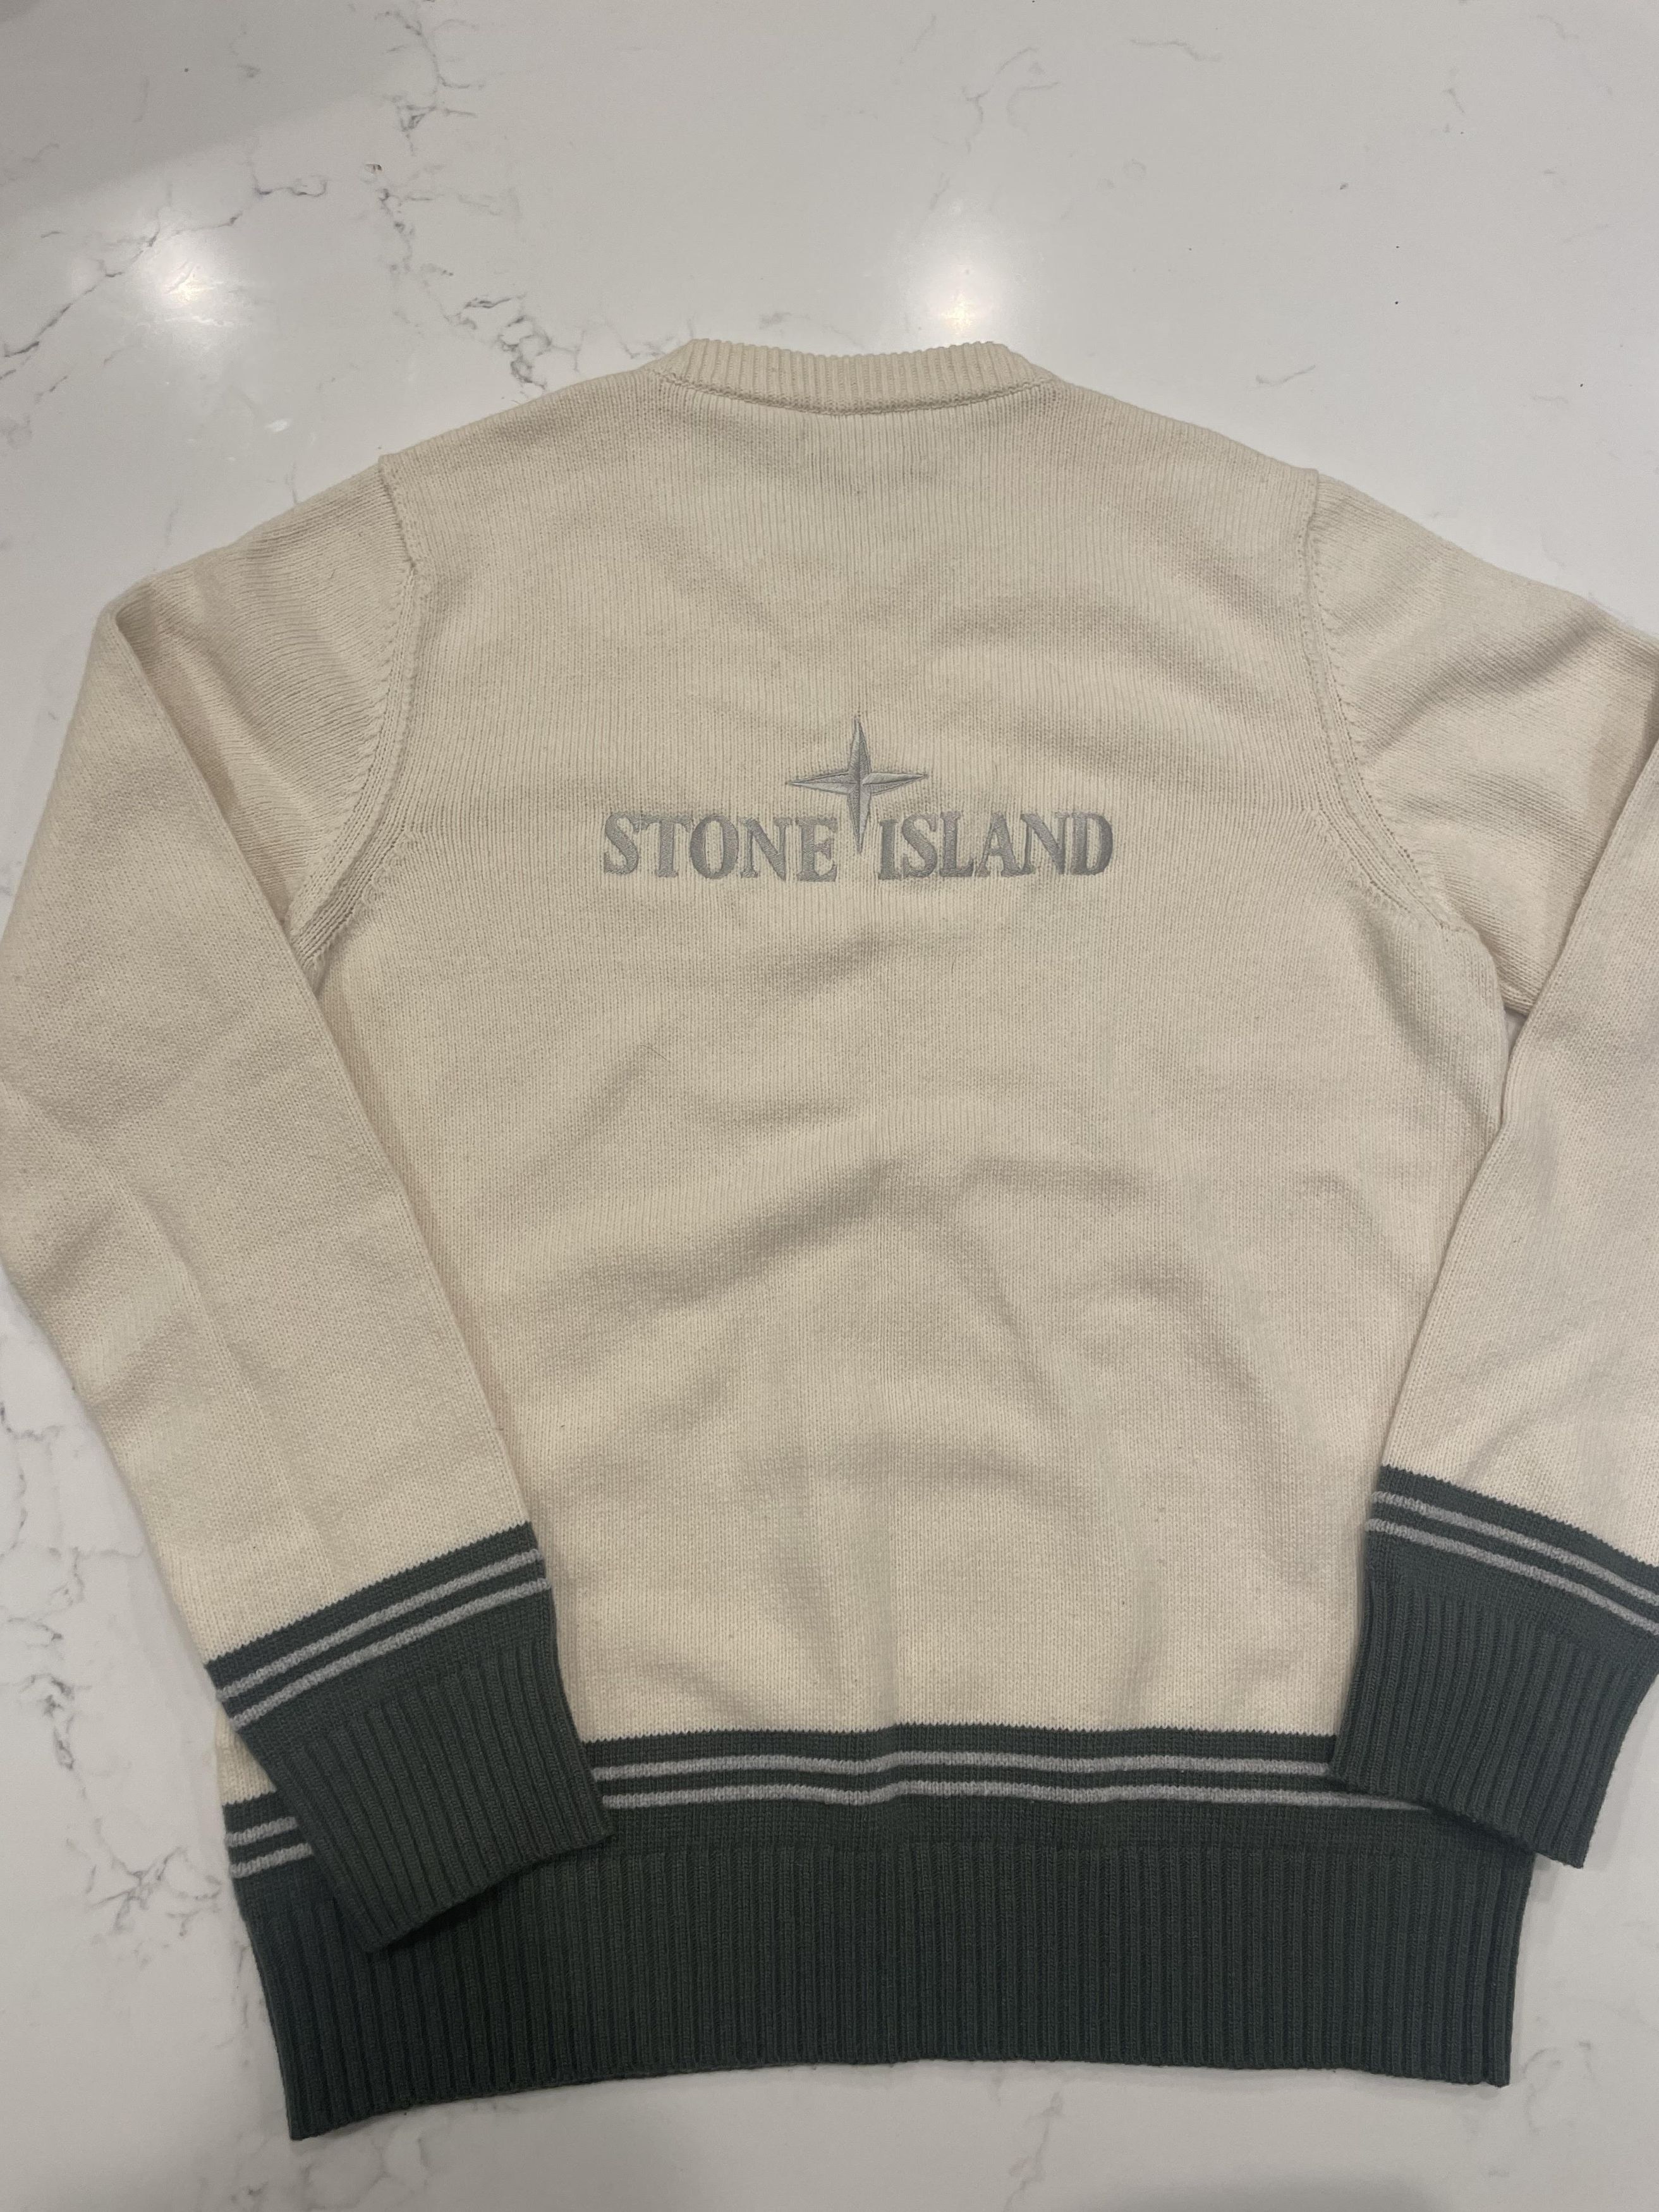 Stone Island Vintage Stone Island Knit Sweater Size US L / EU 52-54 / 3 - 2 Preview